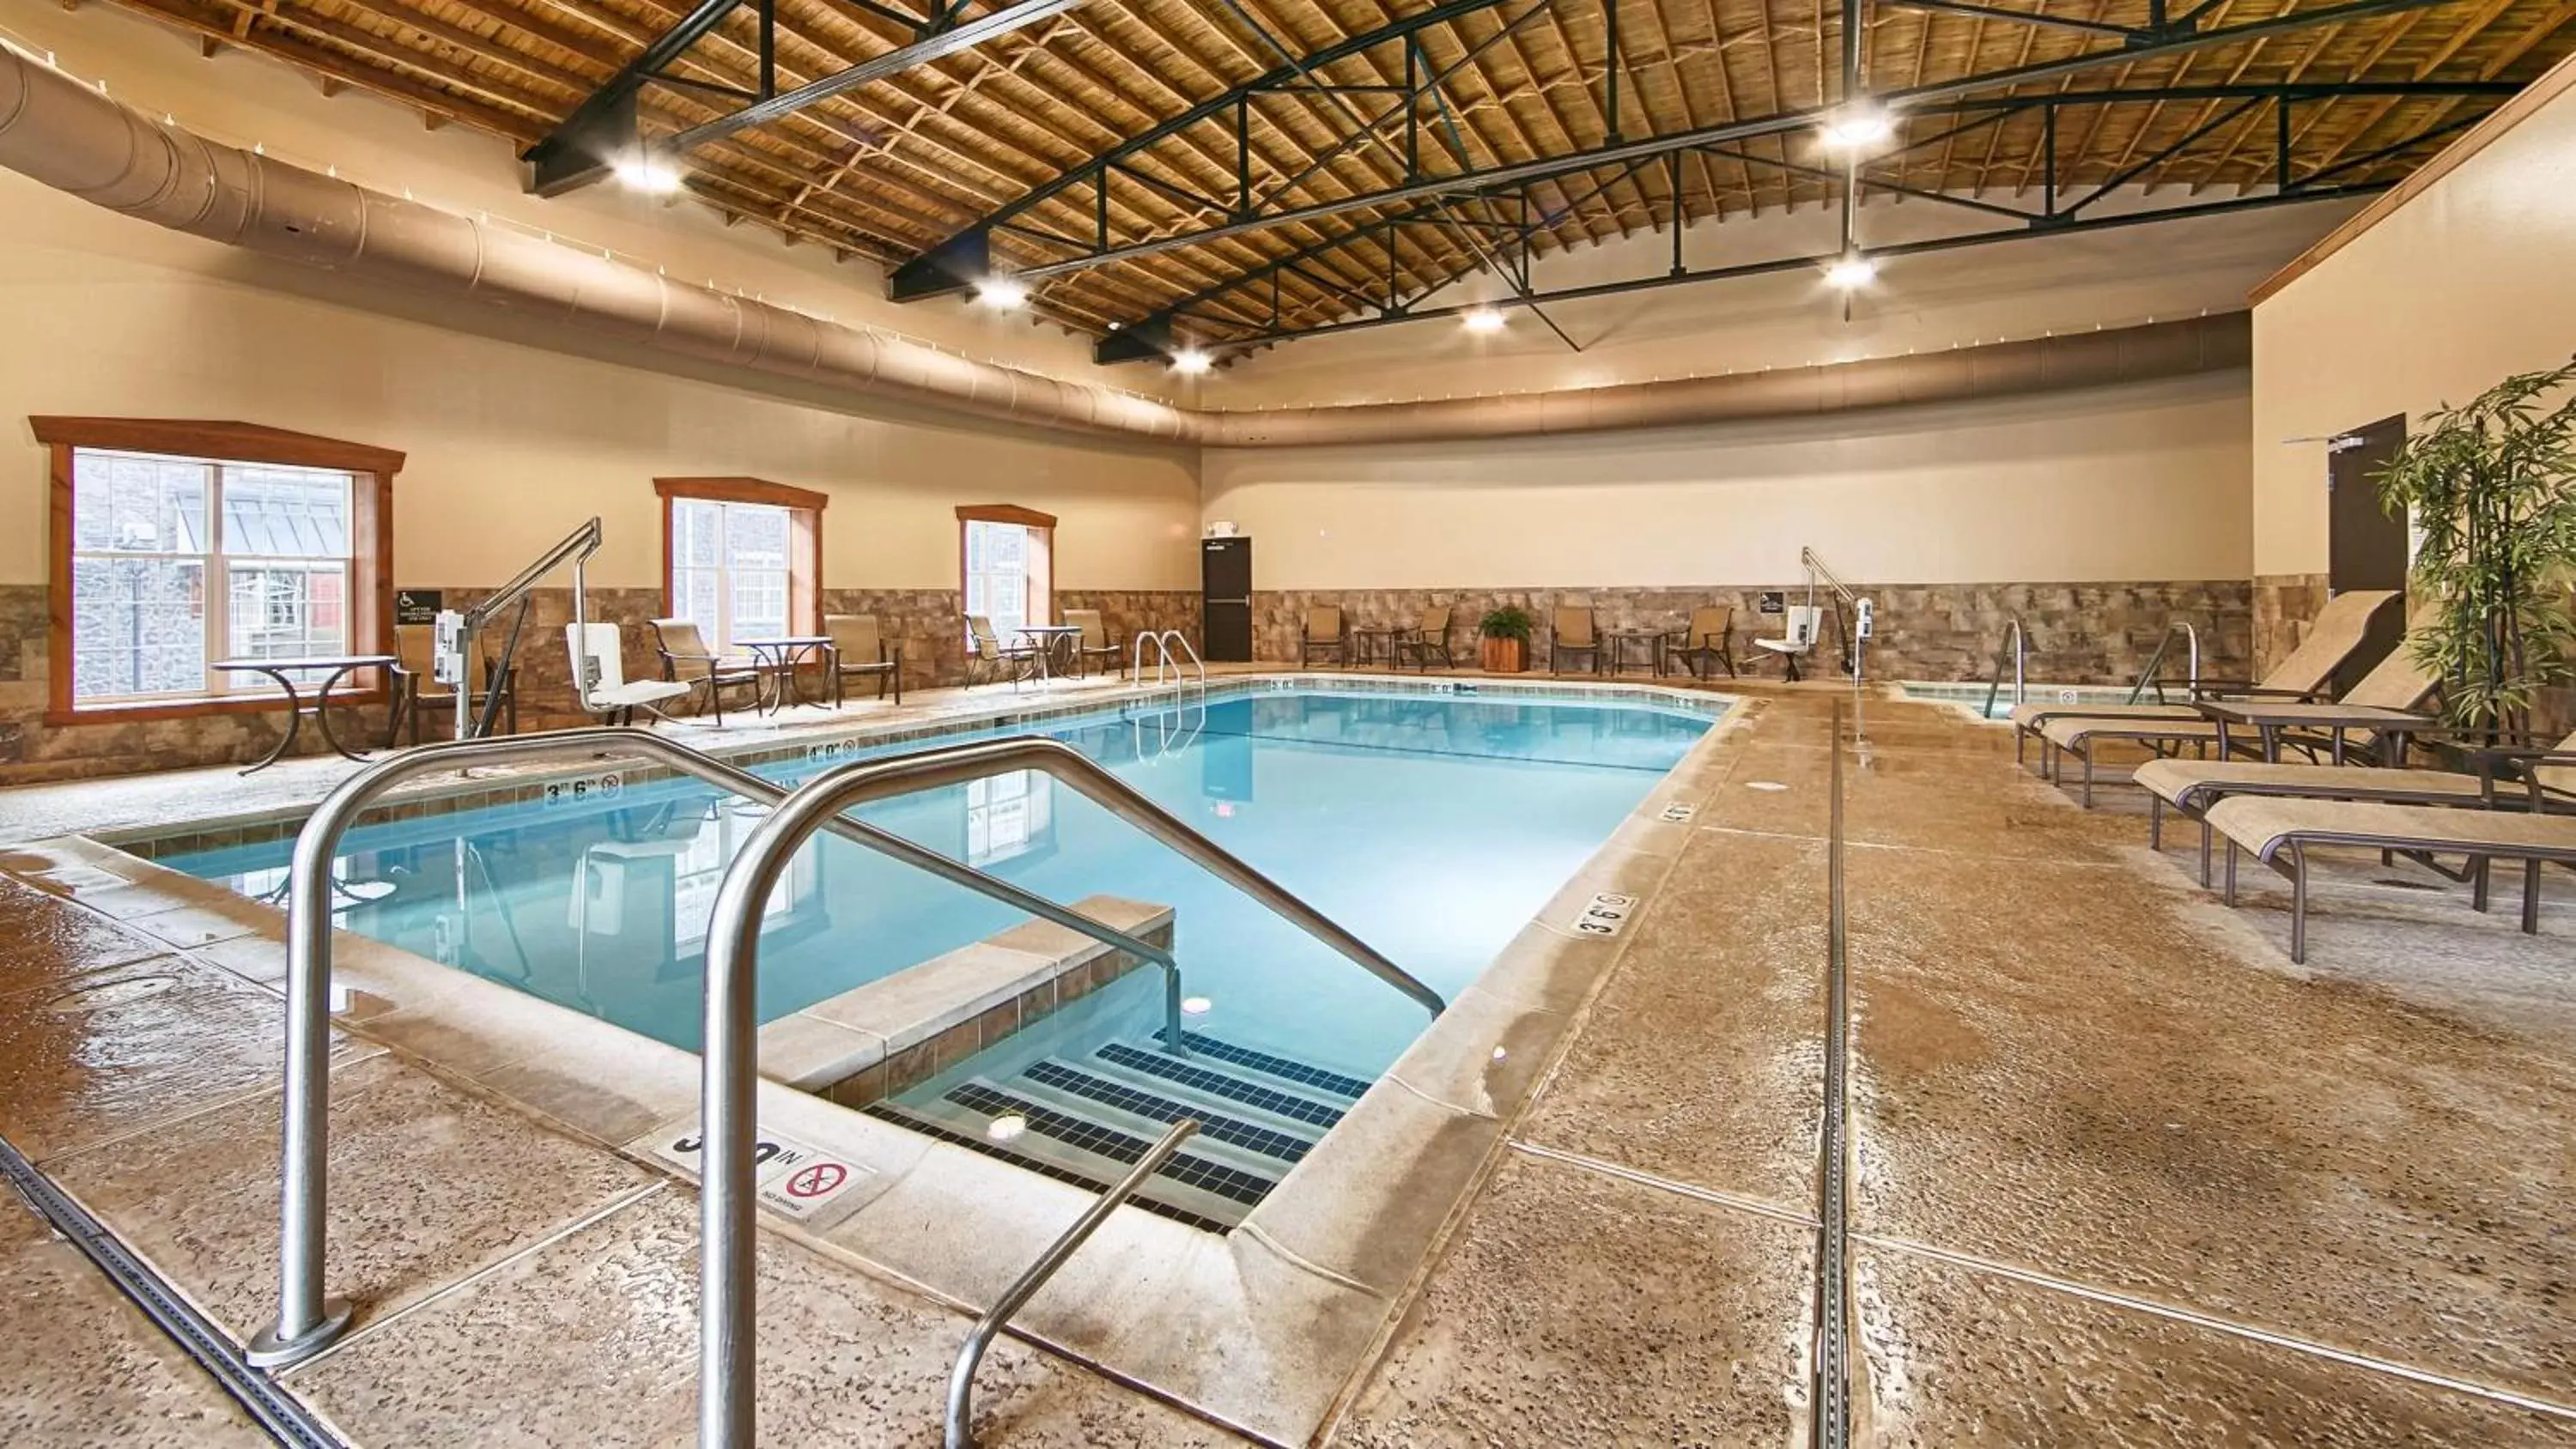 On site, Swimming Pool in Best Western Plus Intercourse Village Inn